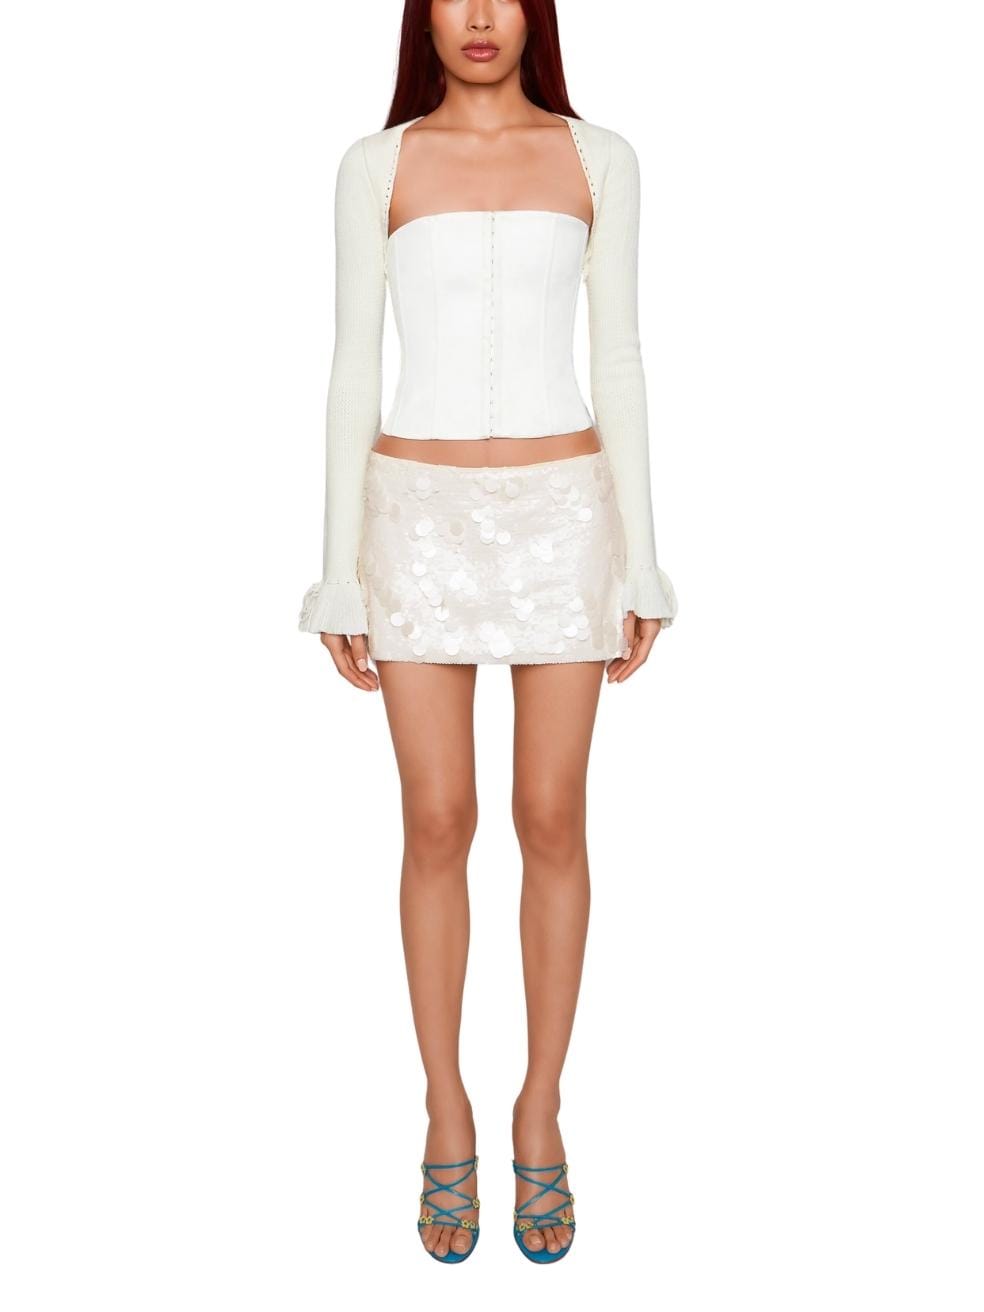 low rise Paillette skirt white